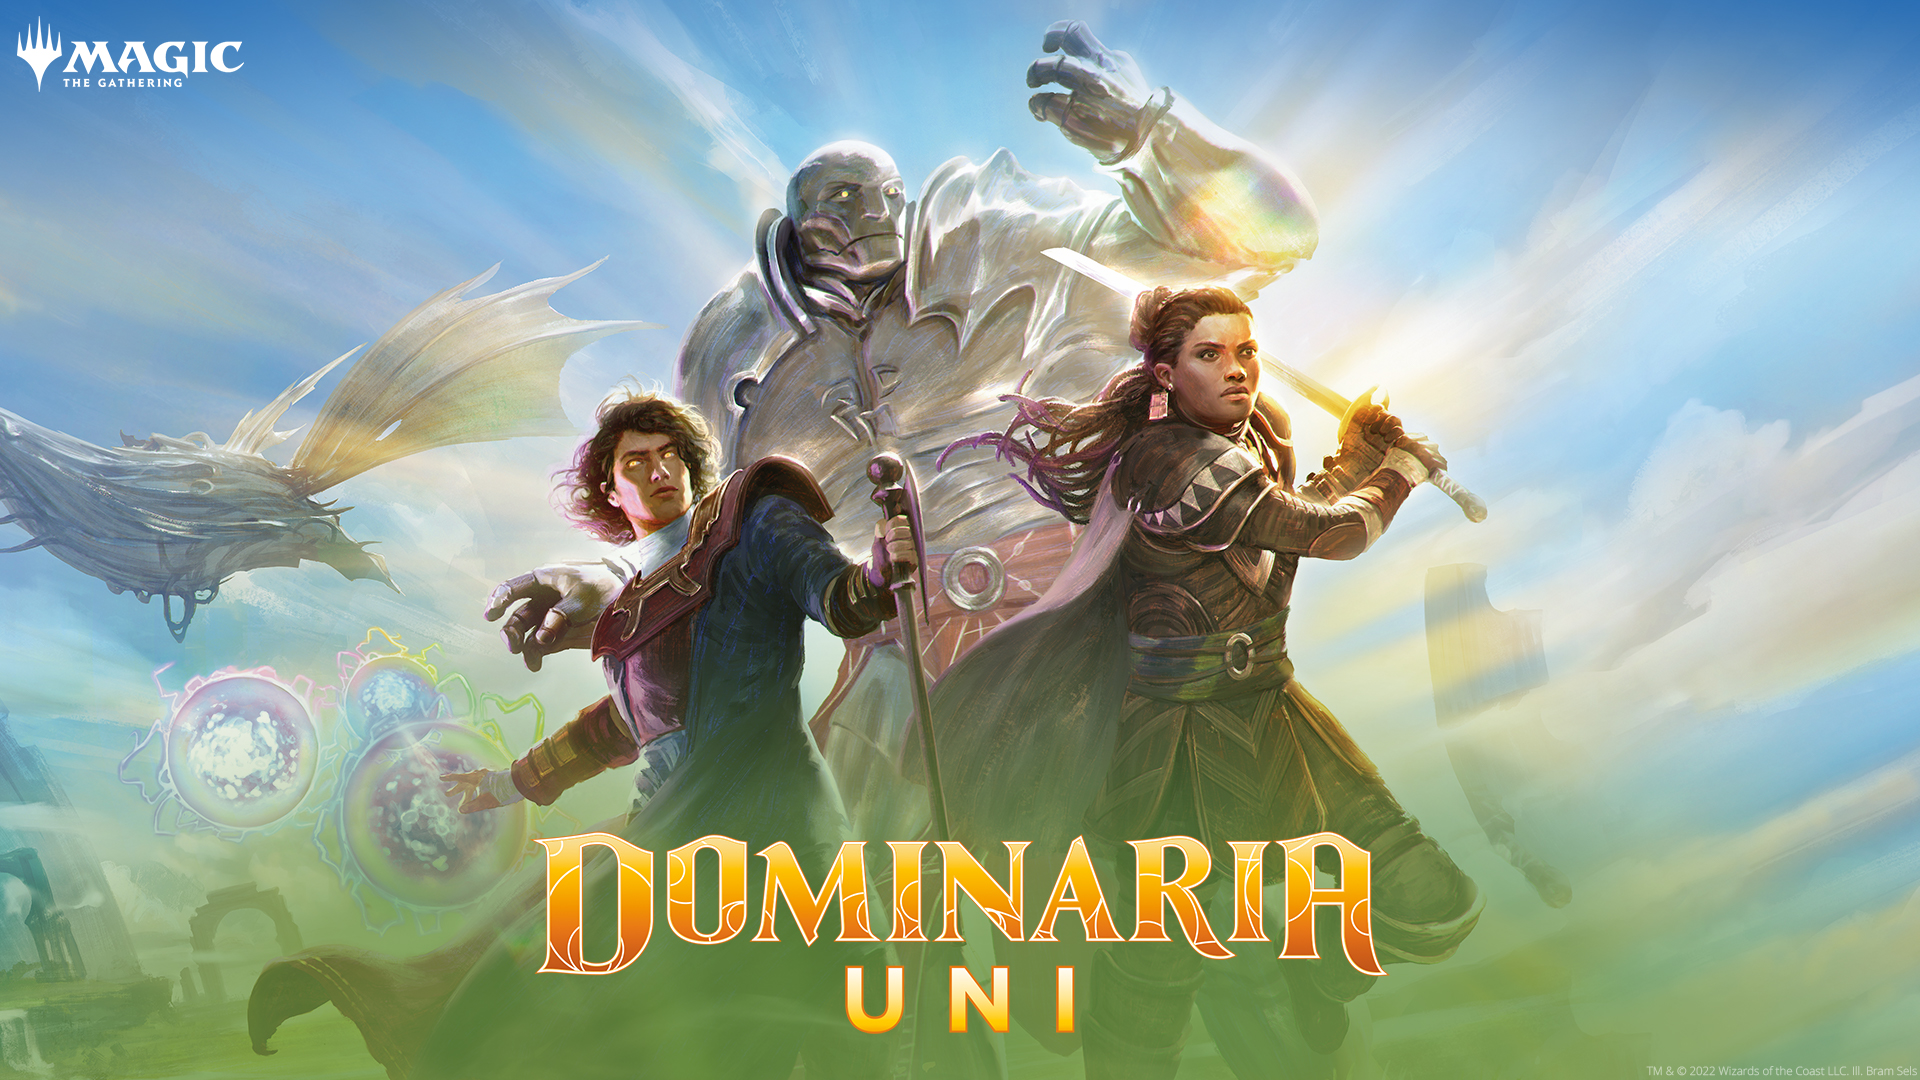 Magic « Dominaria Uni »